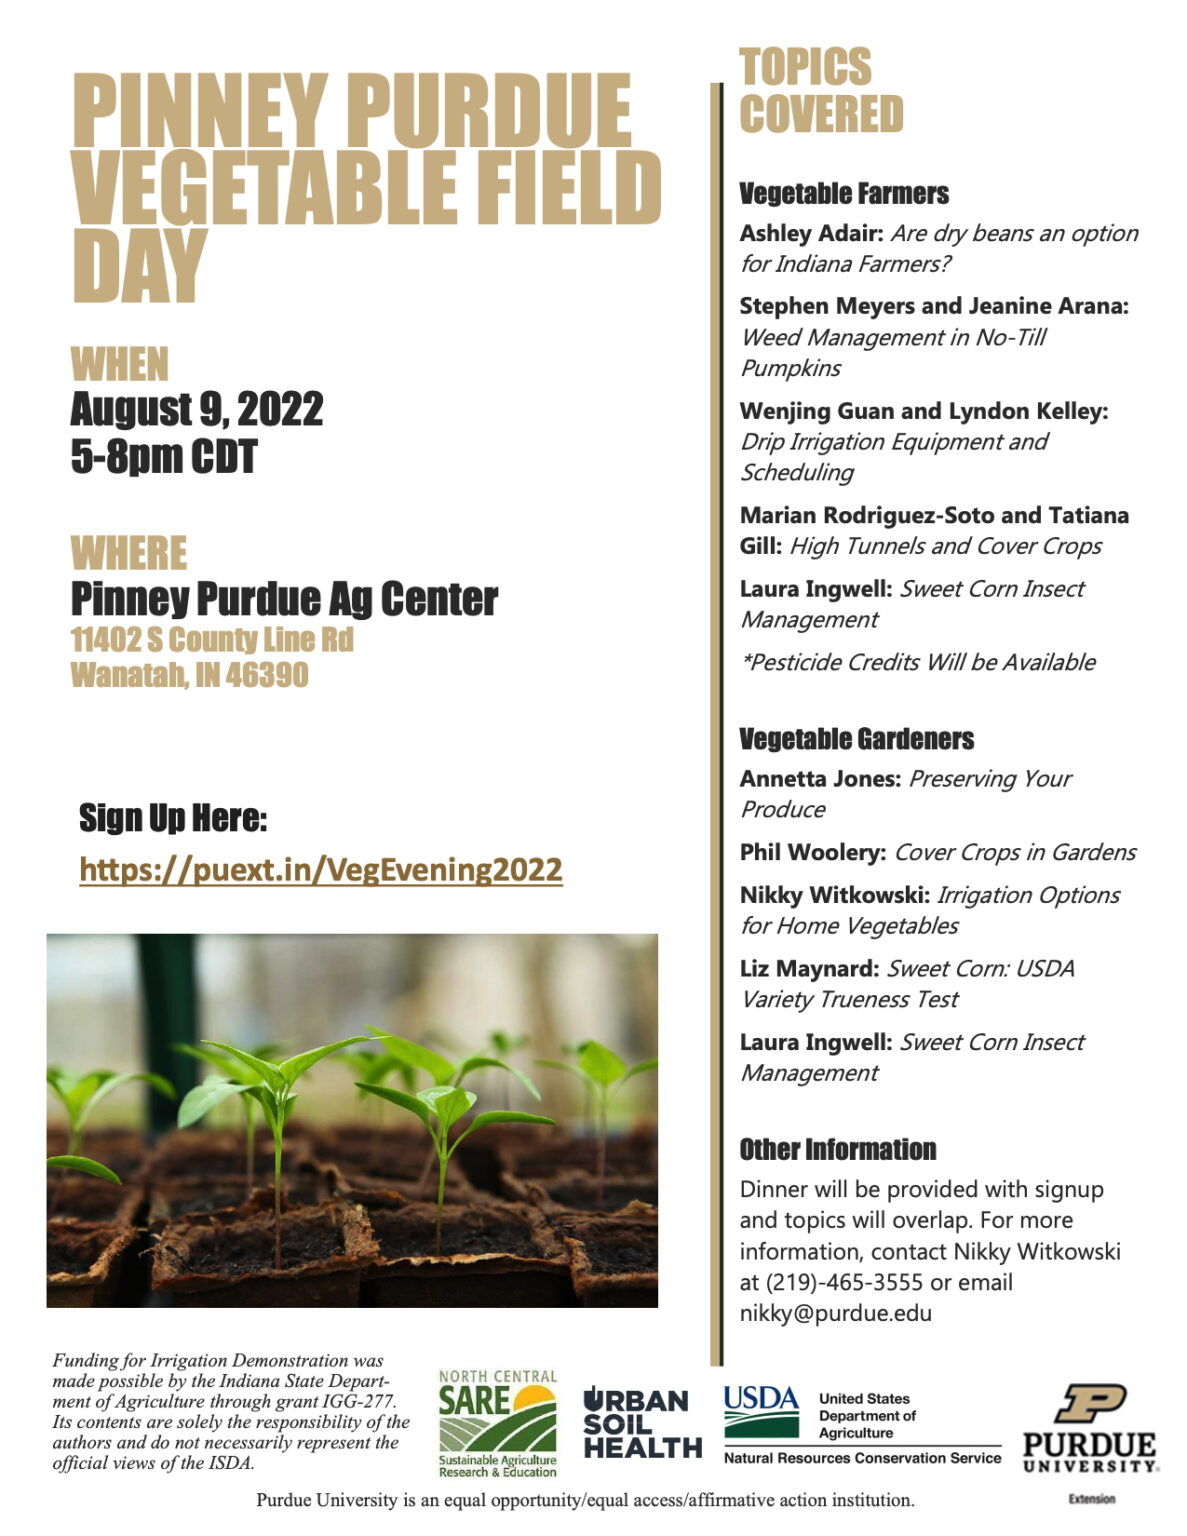 Pinney Purdue Vegetable Field Day Aug. 9, 2022 Purdue University